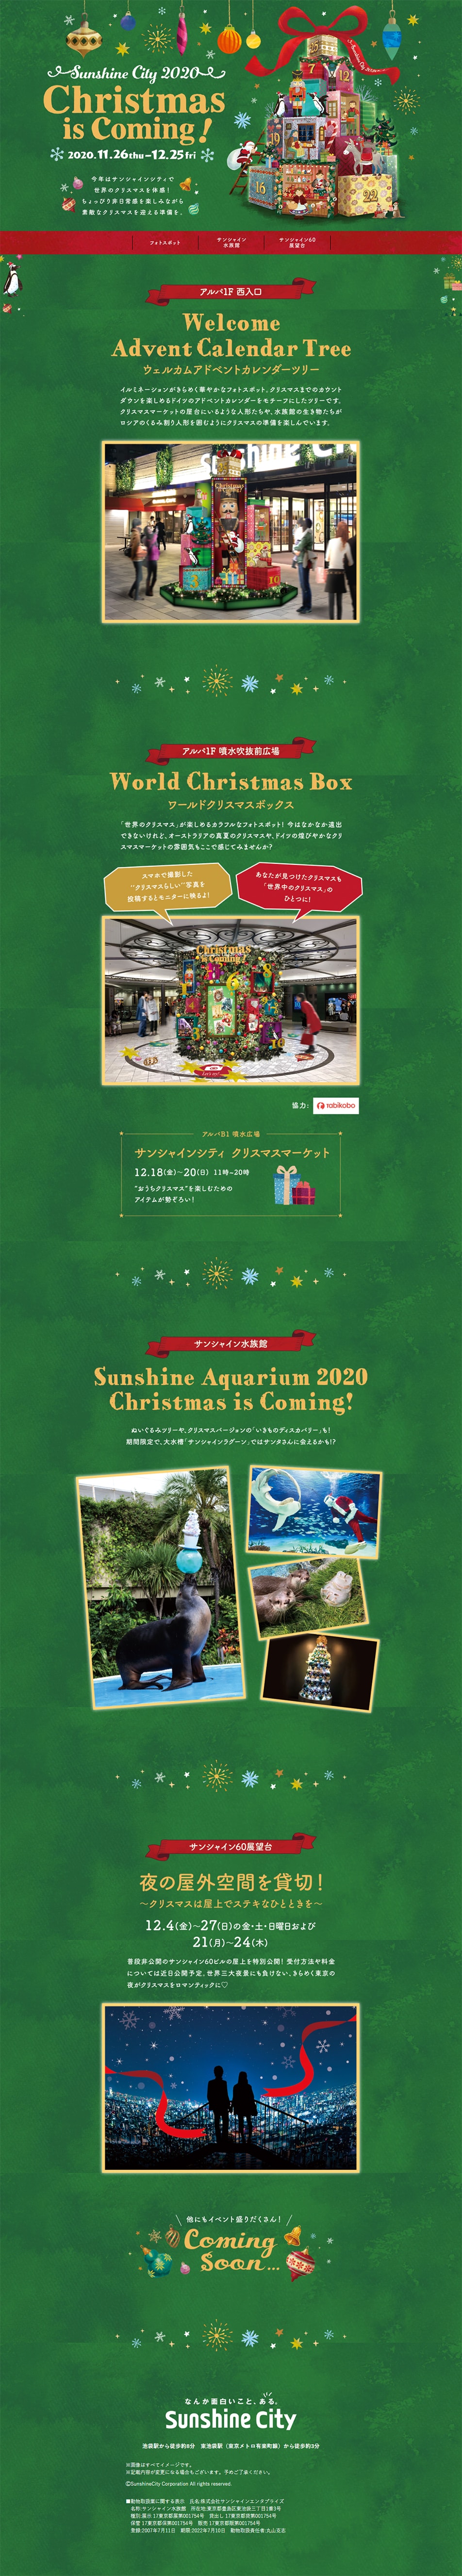 Sunshine City 2020 Christmas is Coming!_pc_1